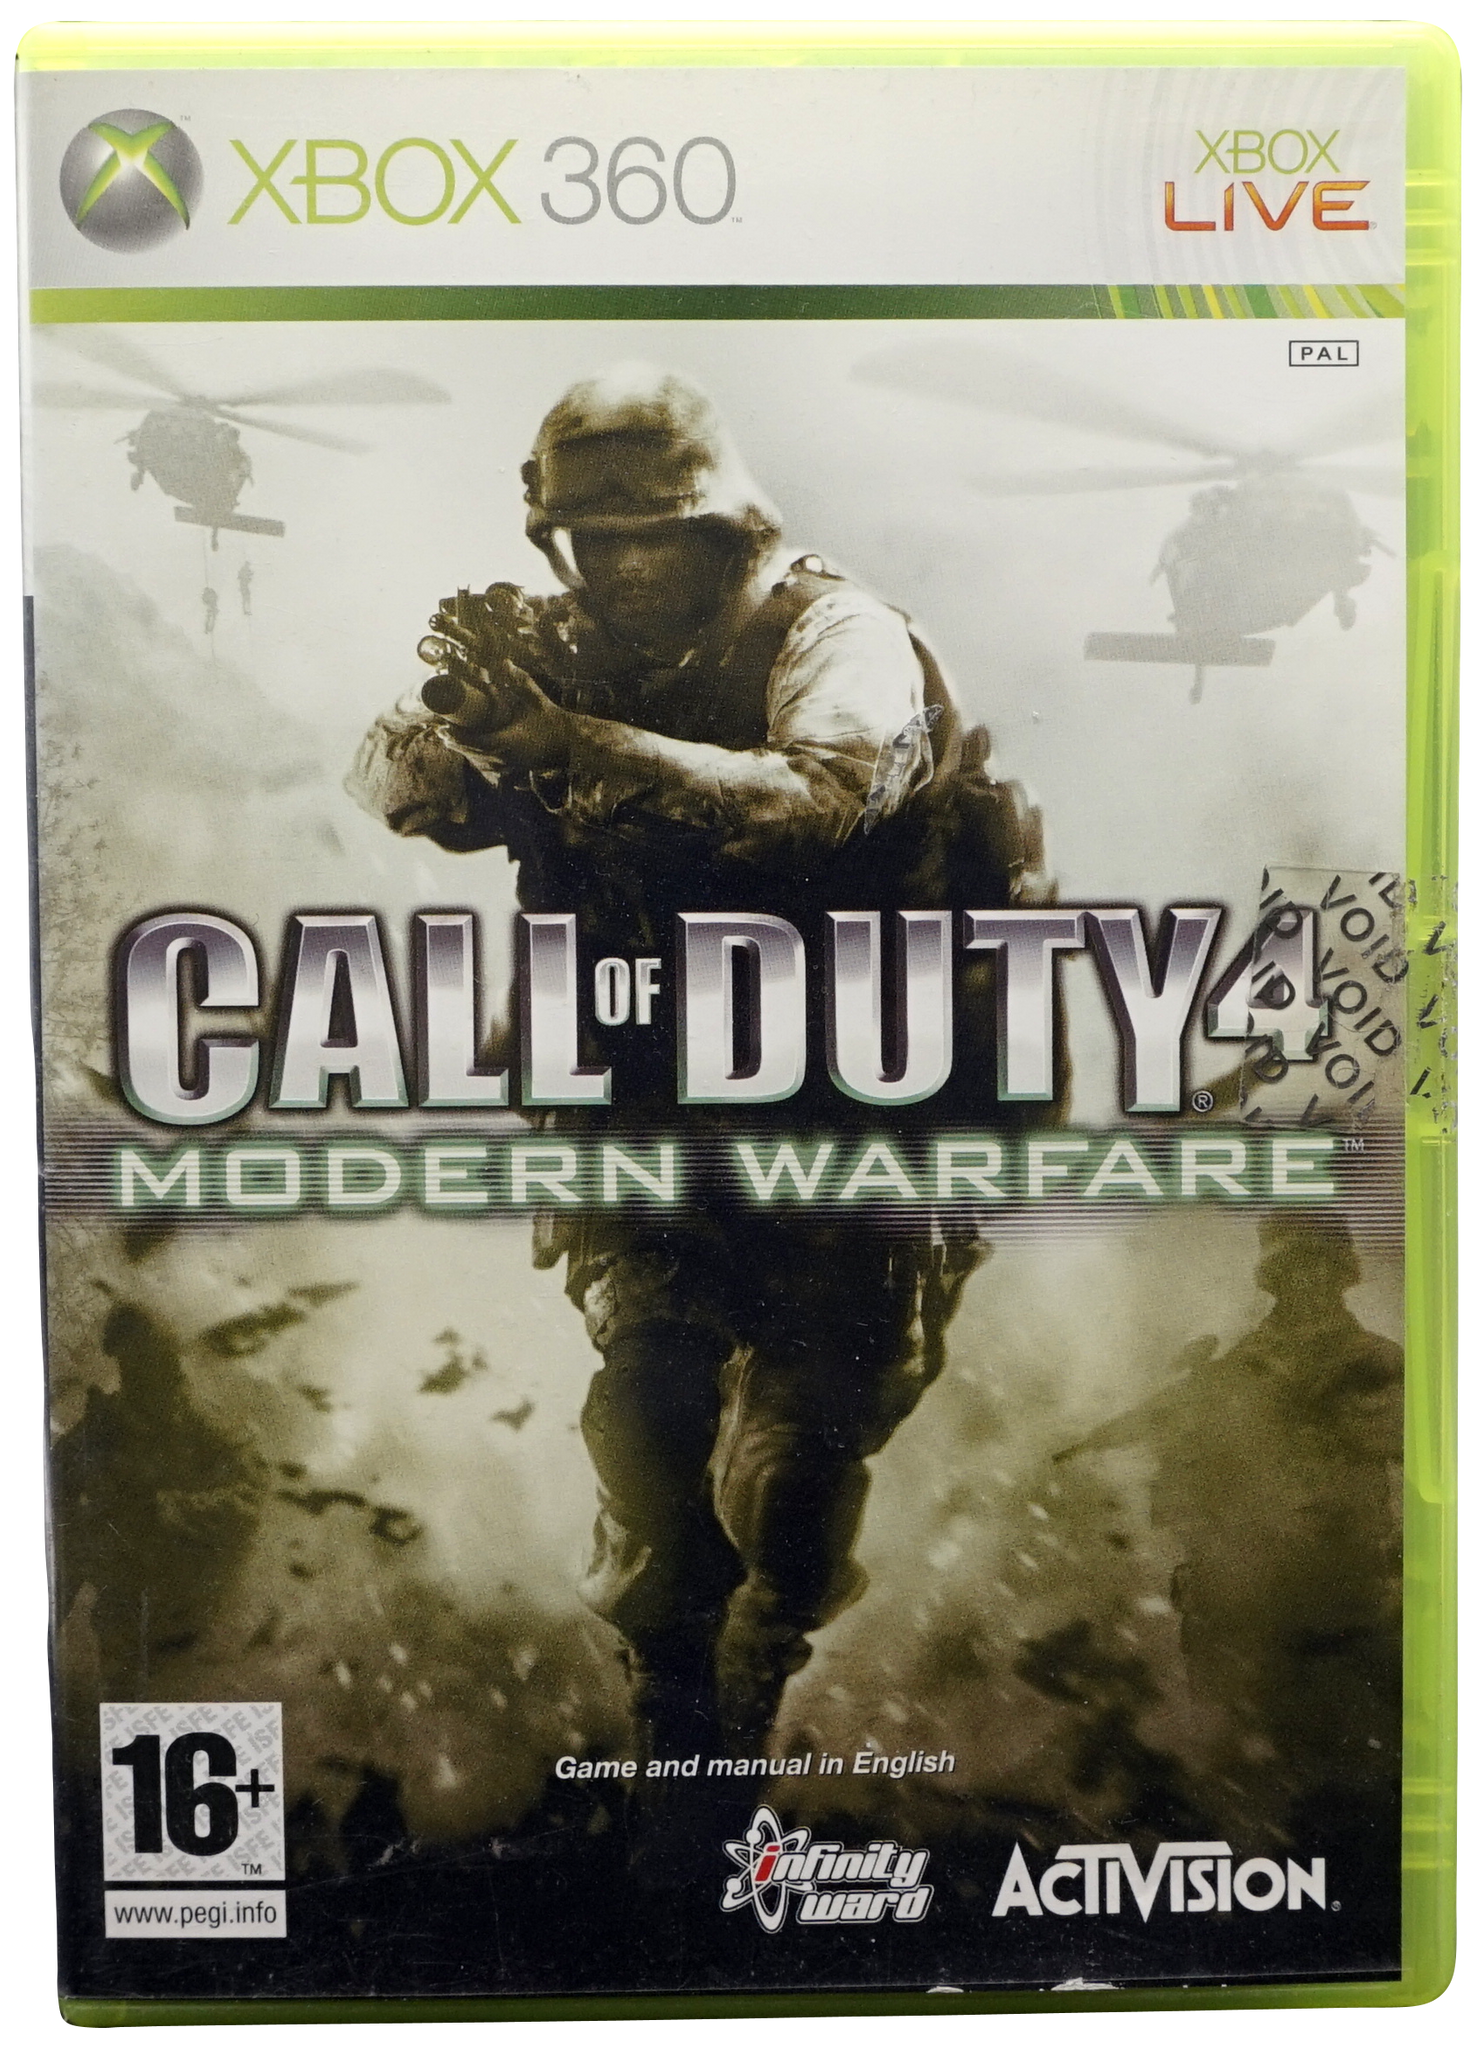 Call of Duty 4 : Modern Warfare (Xbox 360)